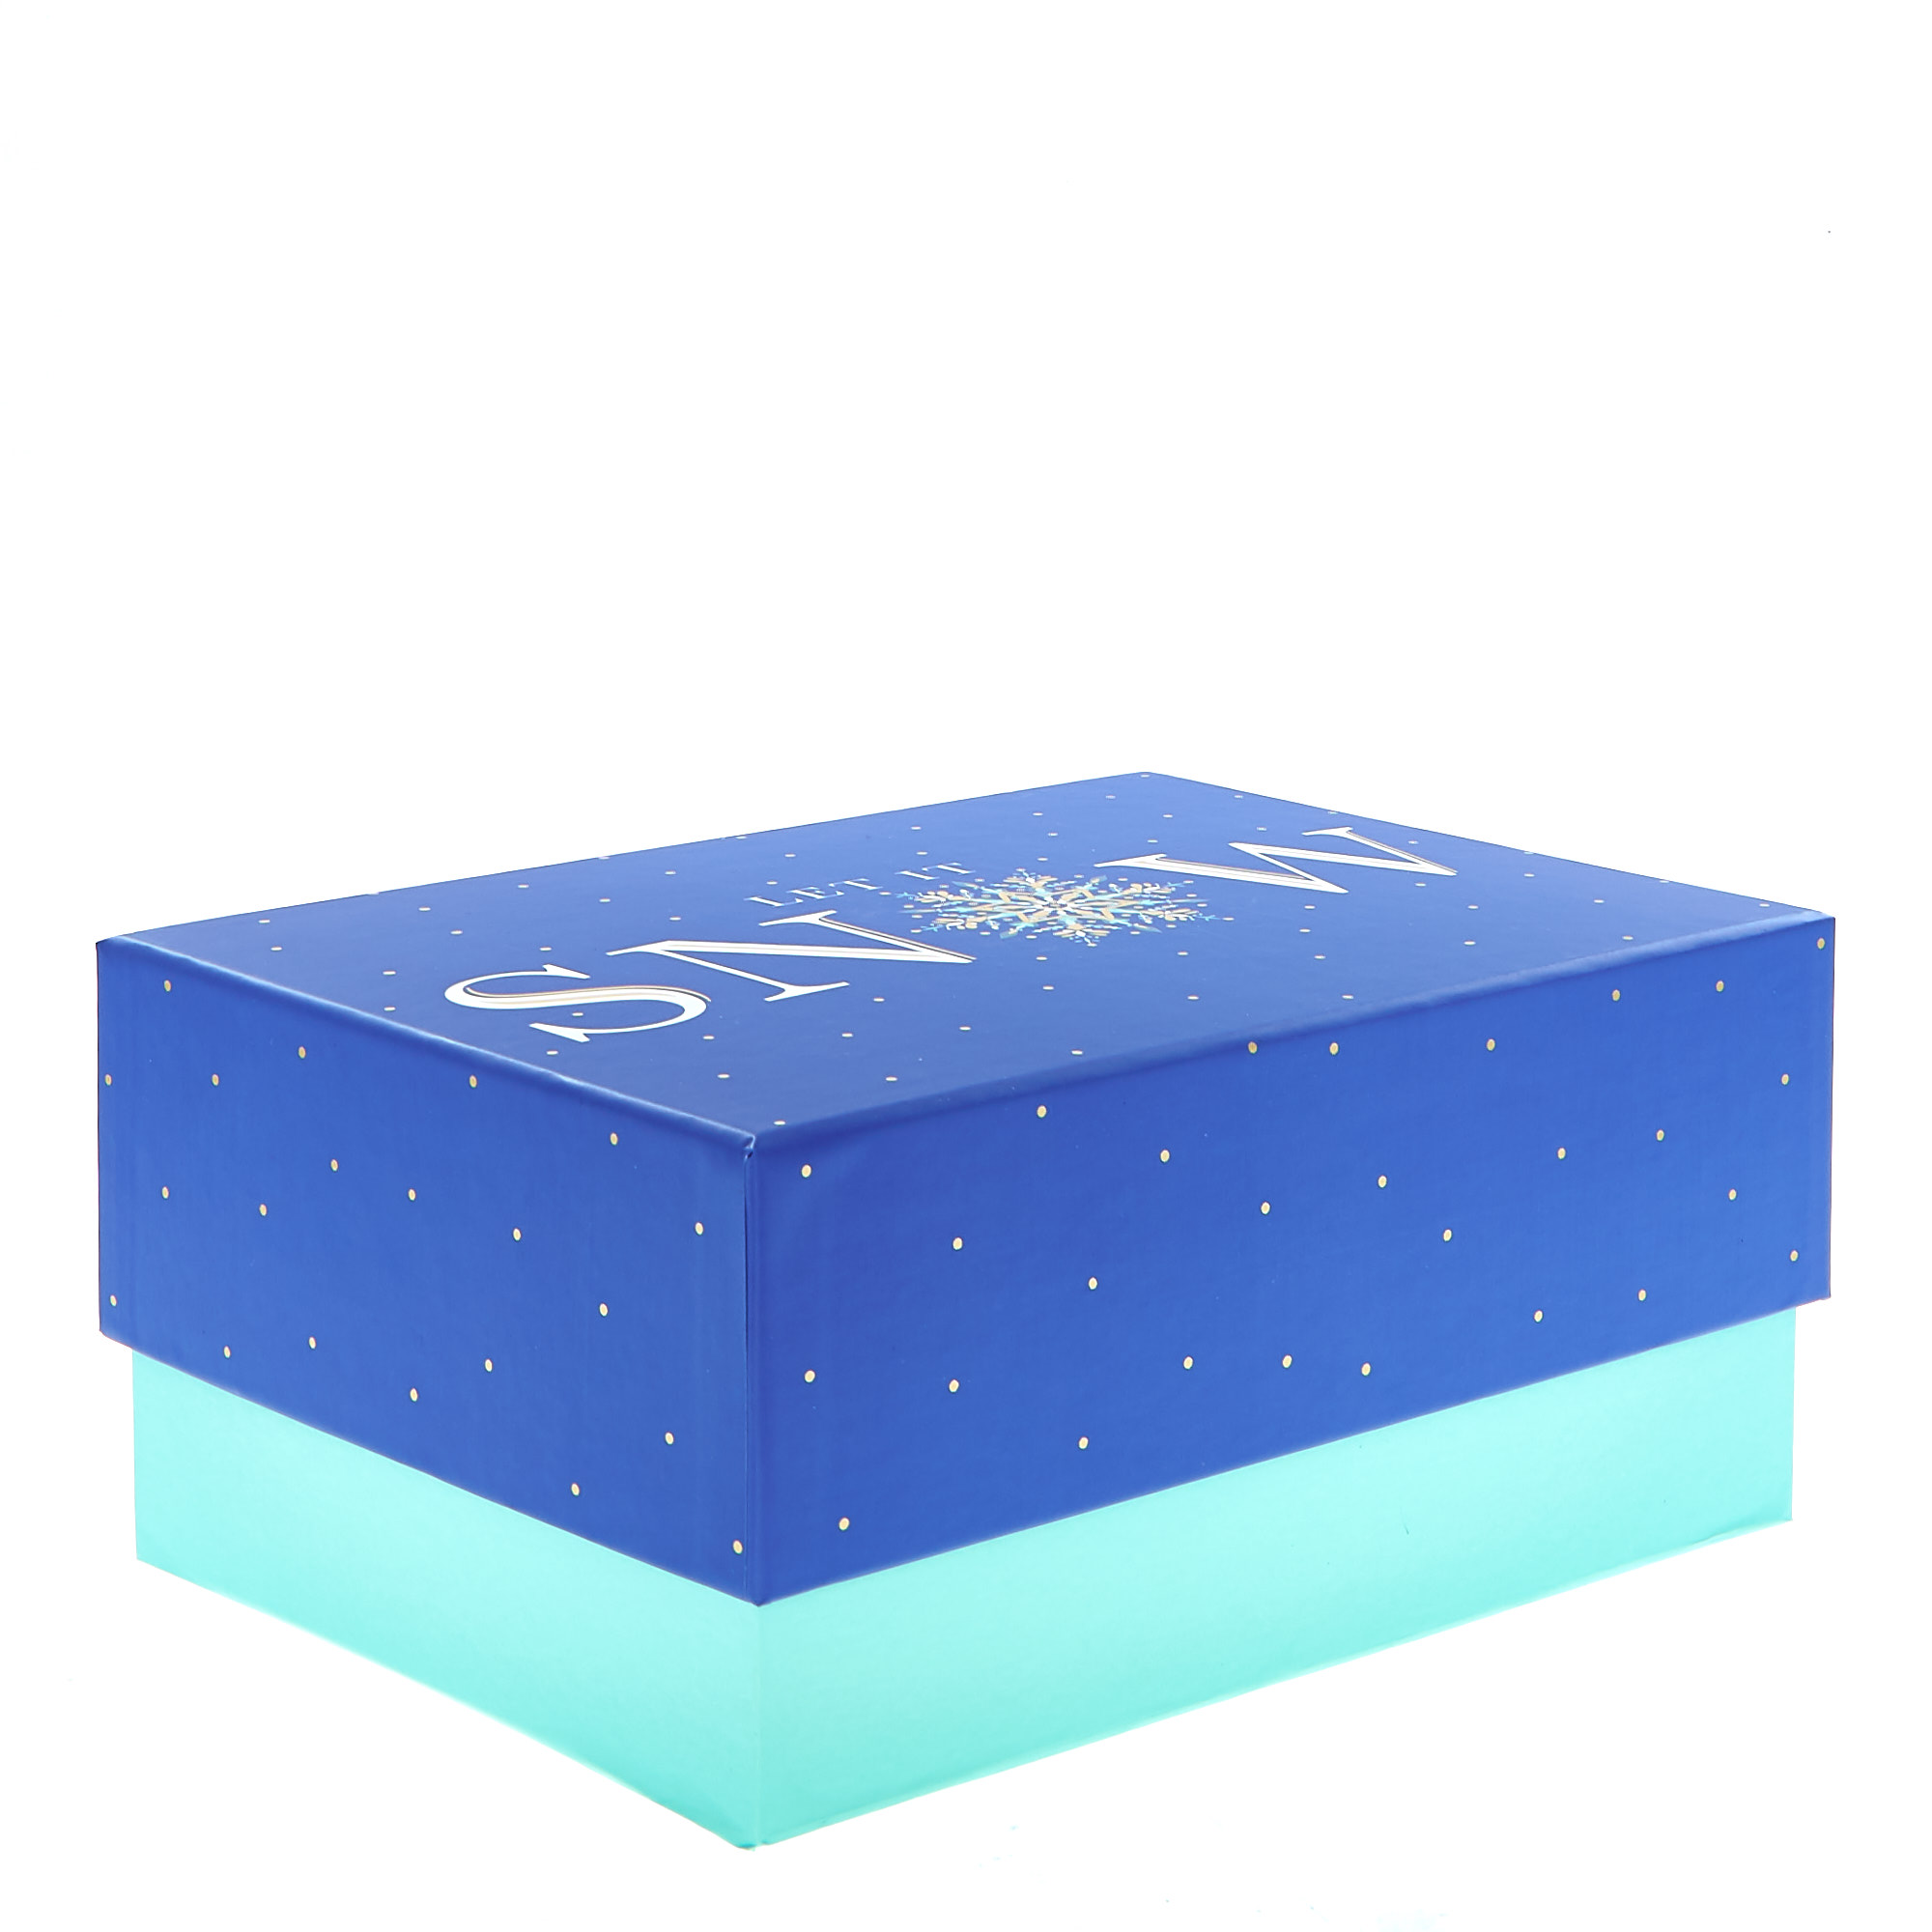 Blue Snowflakes Christmas Gift Boxes - Set Of 4